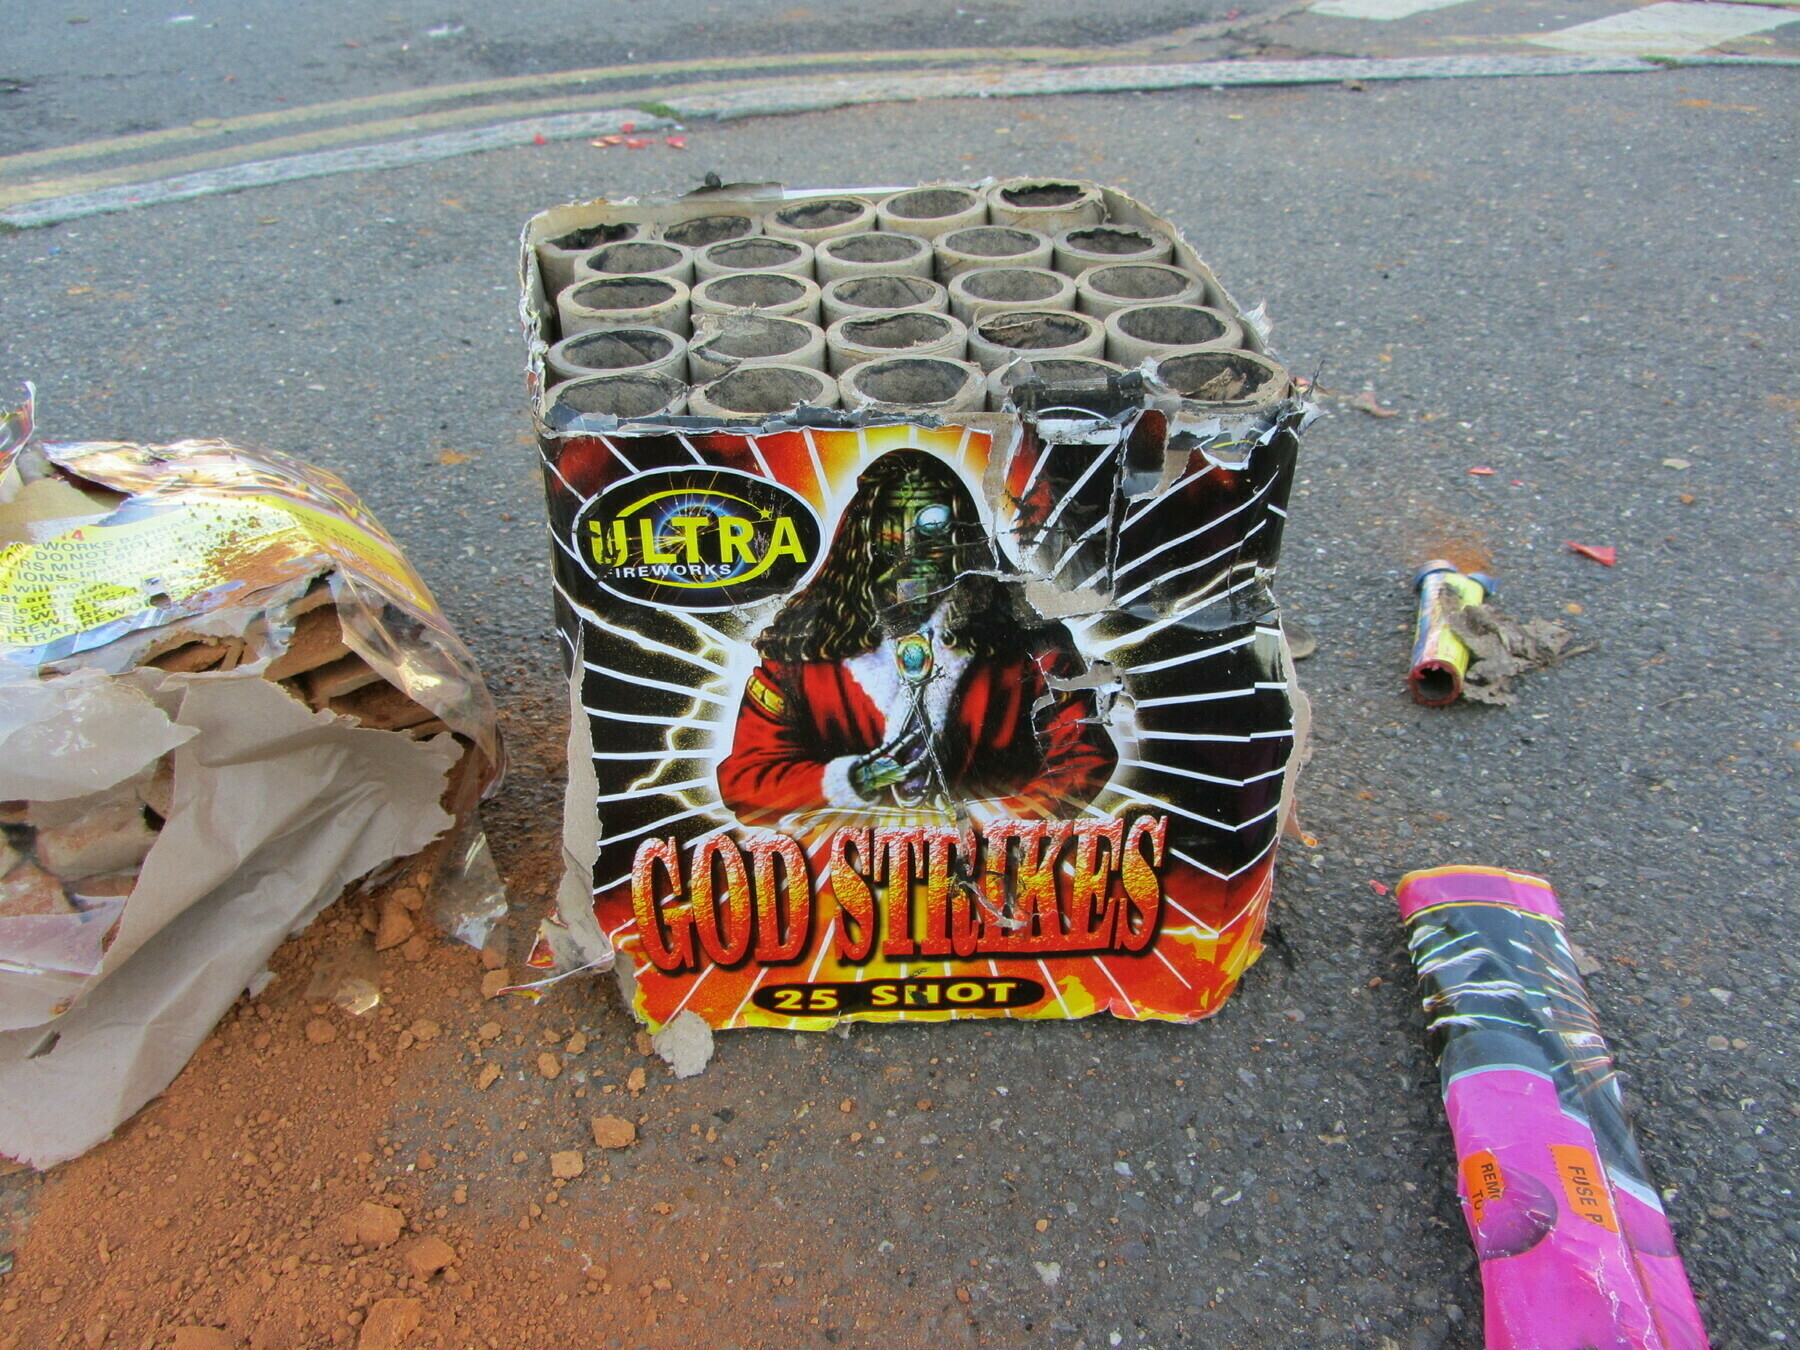 Colourful empty "Godstrikes" fireworks case.